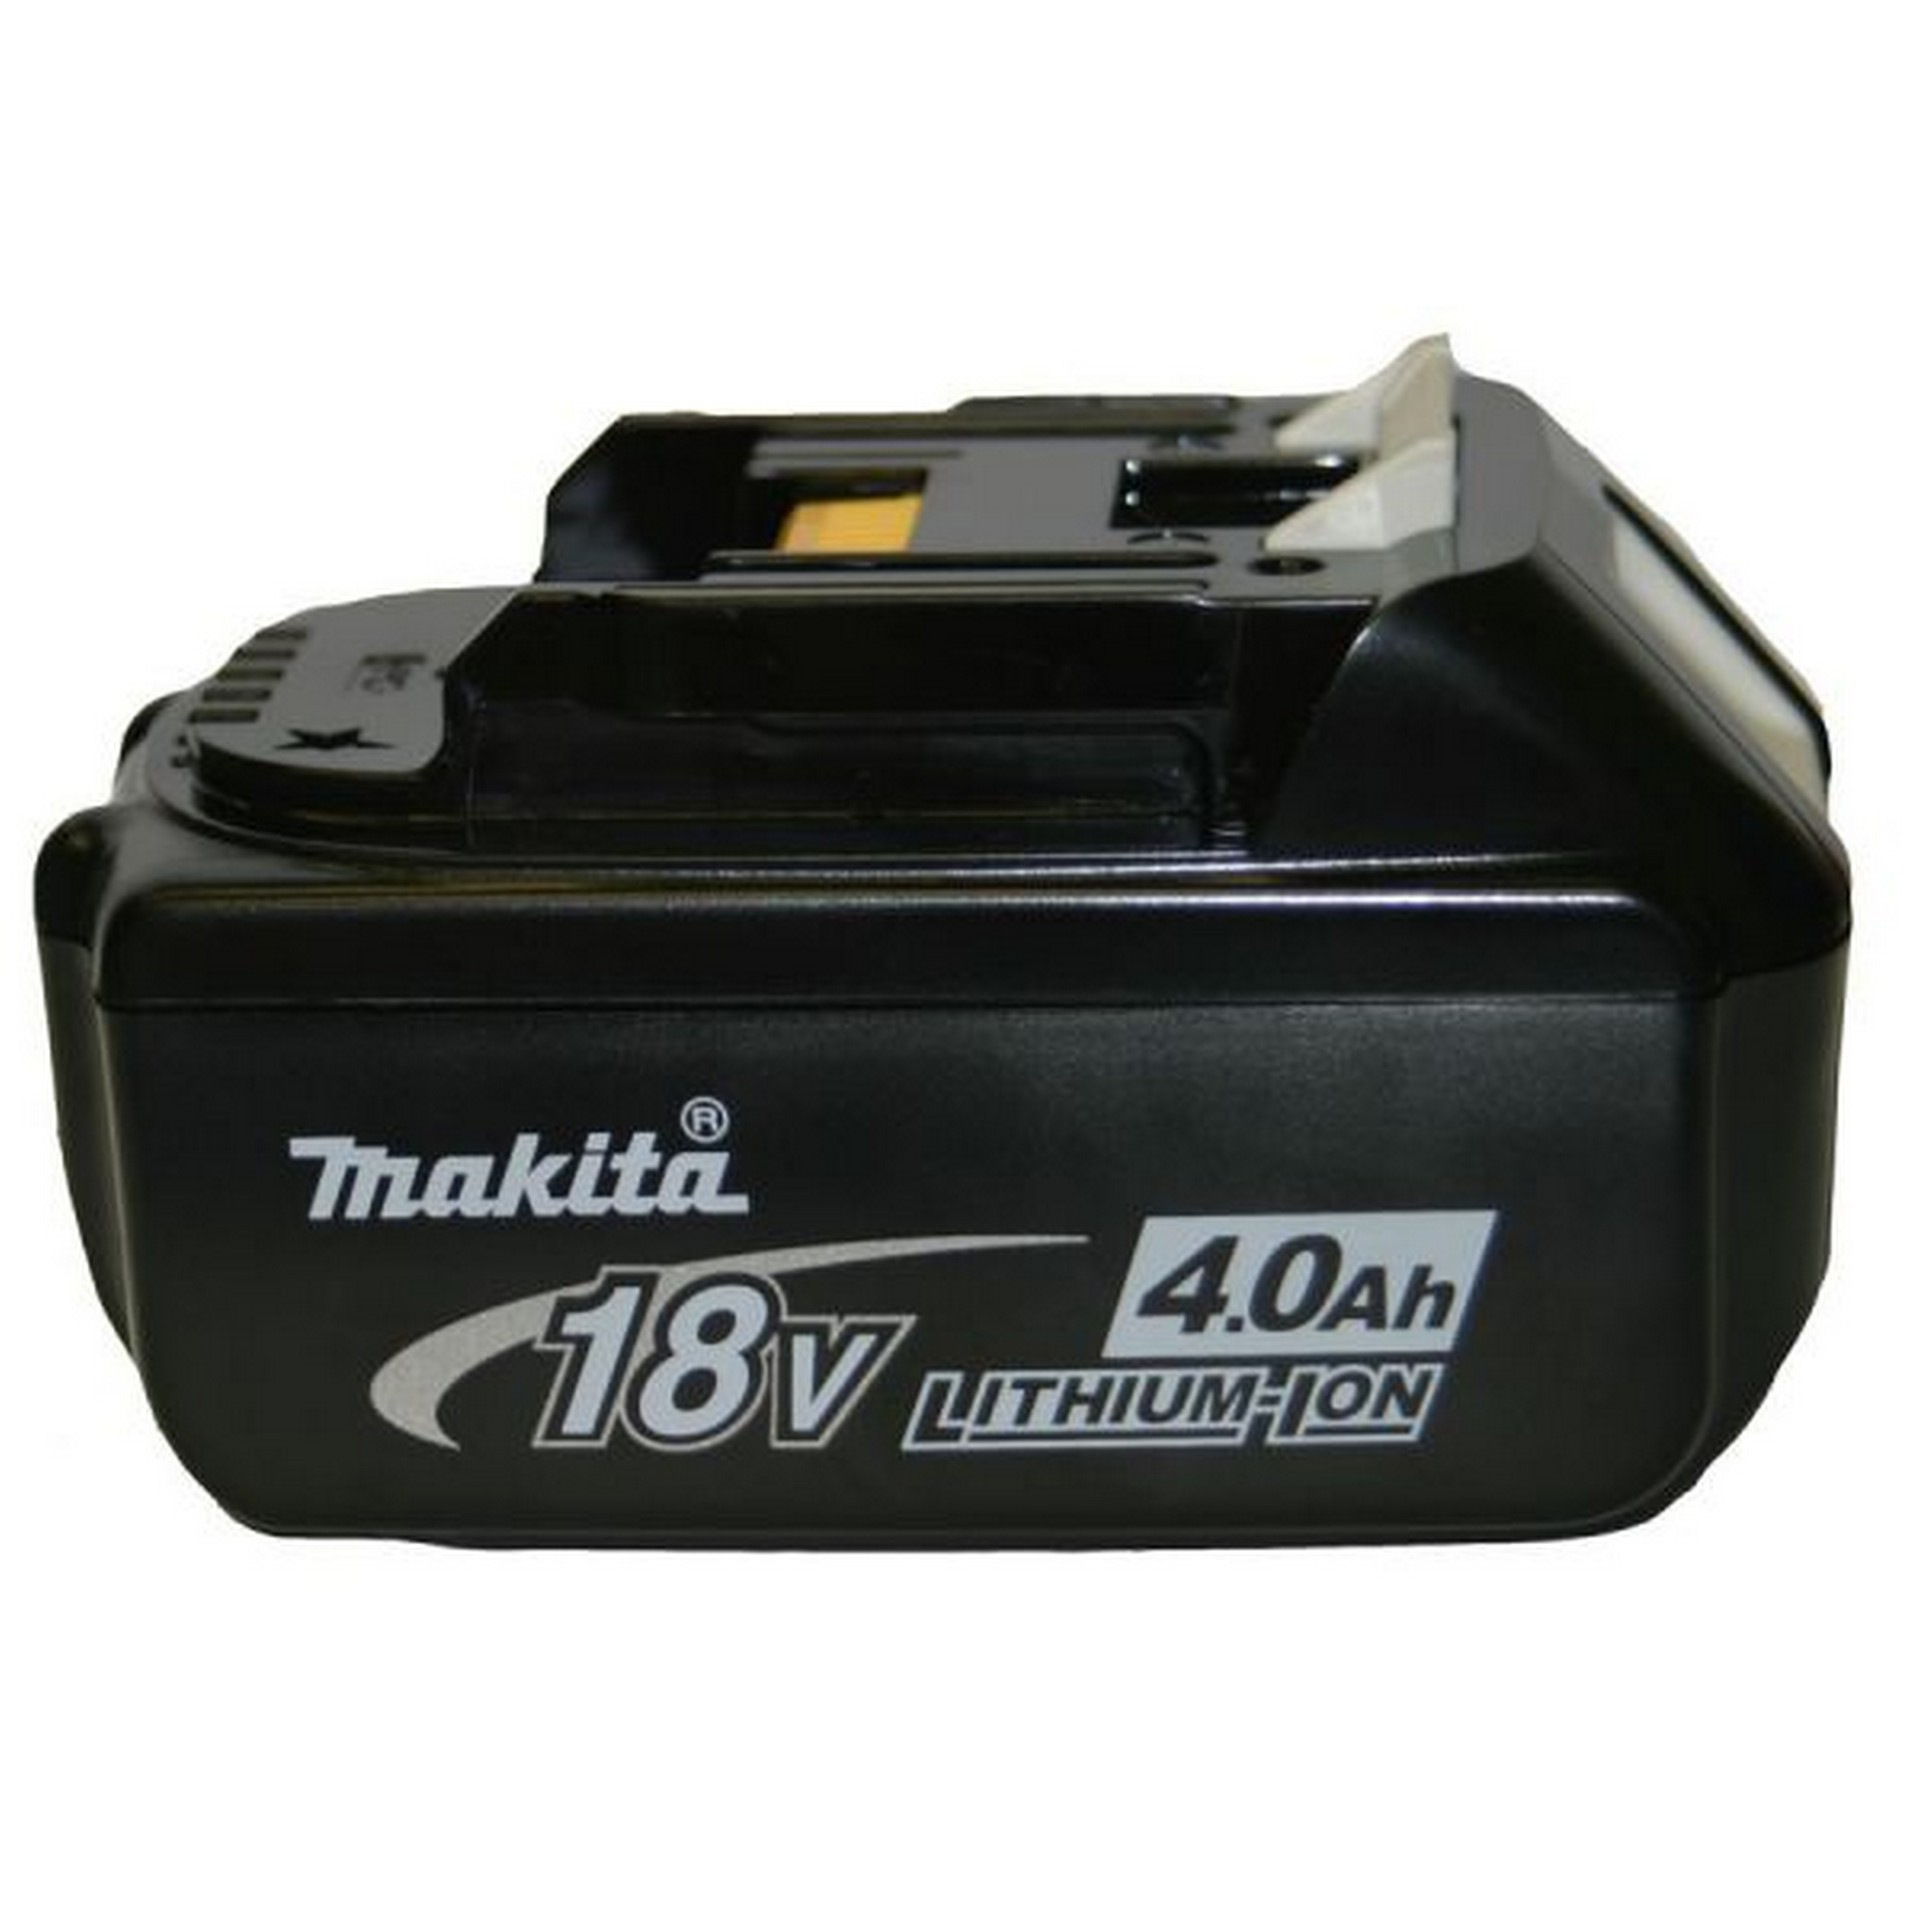 Аккумулятор макита 18v оригинал. Батарея аккумуляторная Makita bl1840. АКБ Макита 18в. Li-ion 4 а*ч 18v Makita. Аккумулятор Макита 18 вольт 1,5 а.